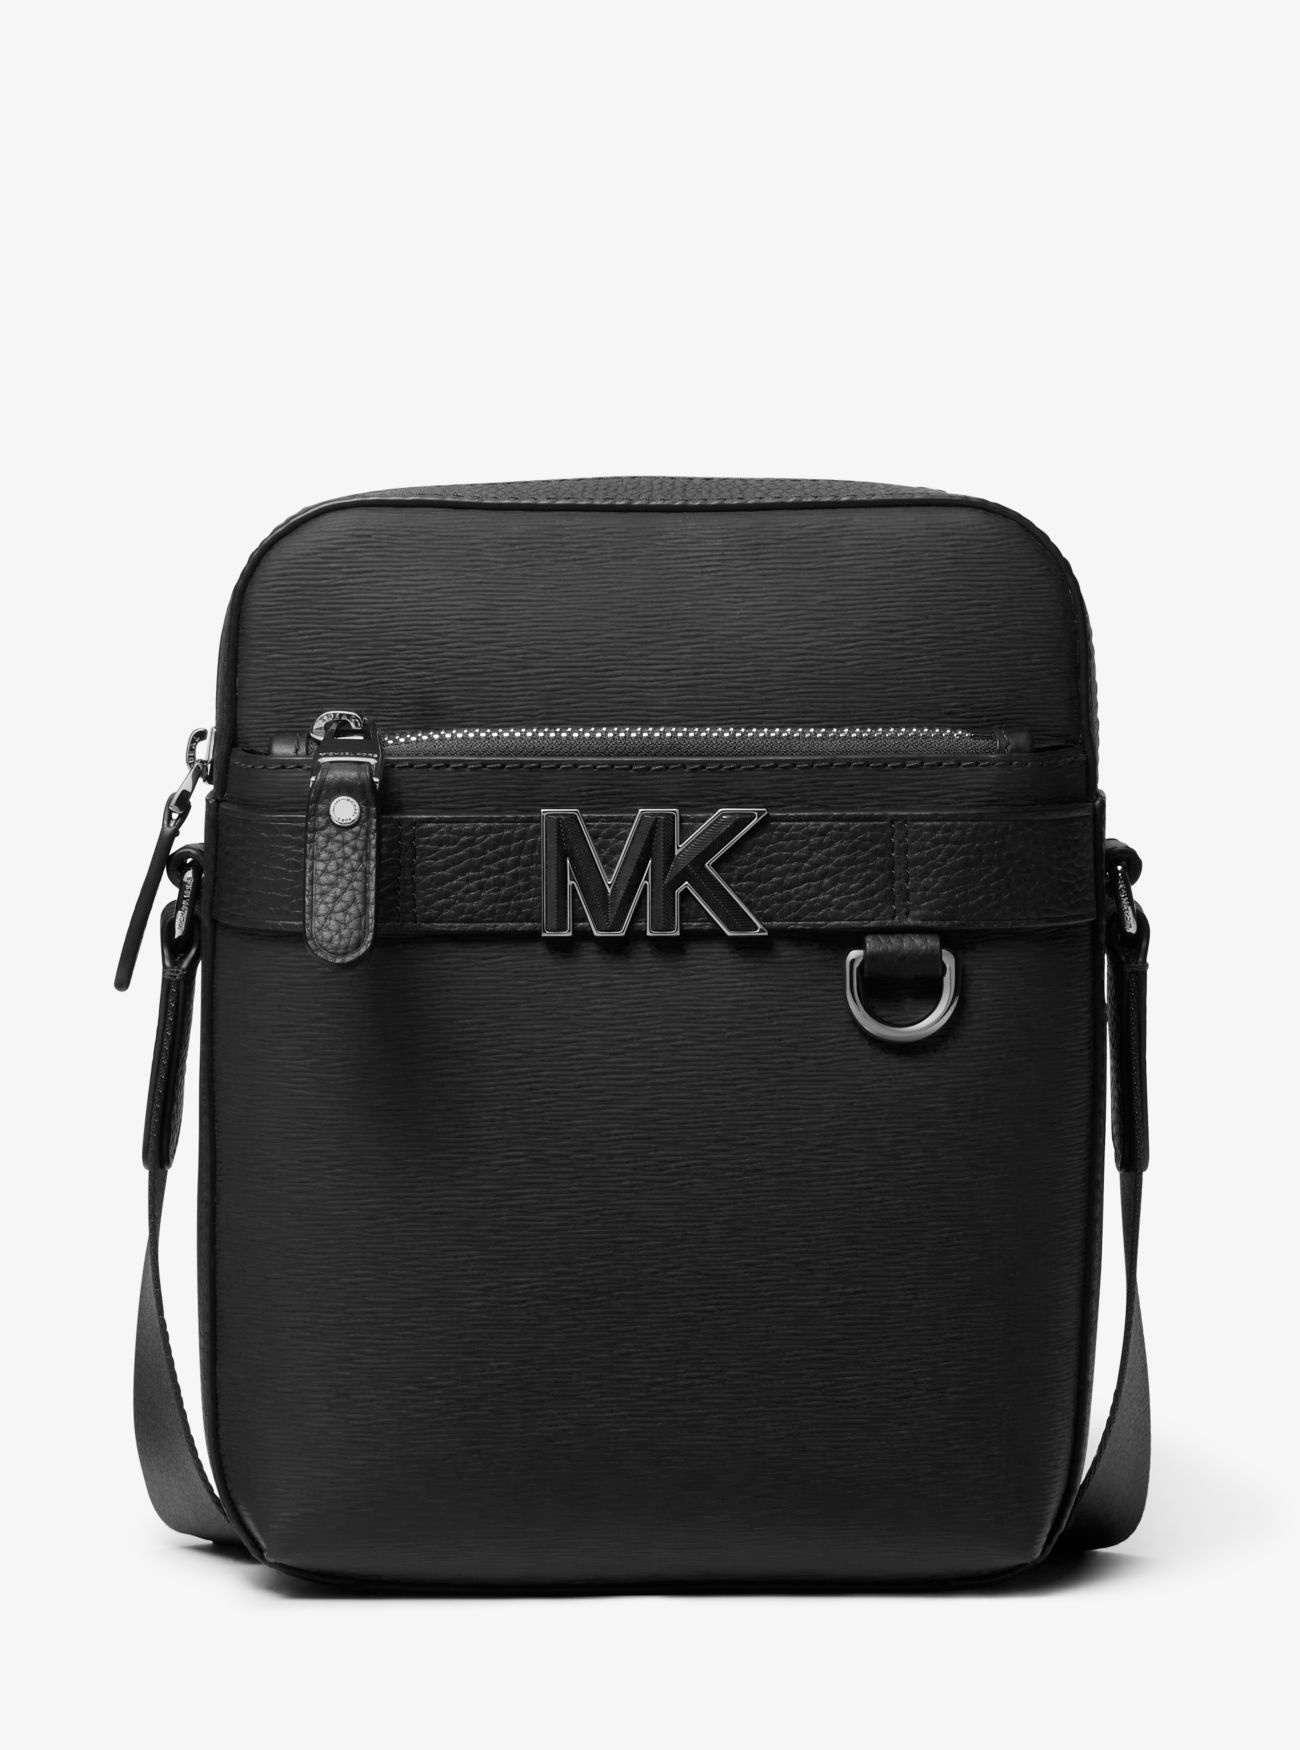 MK Hudson Leather Flight Bag - Black - Michael Kors